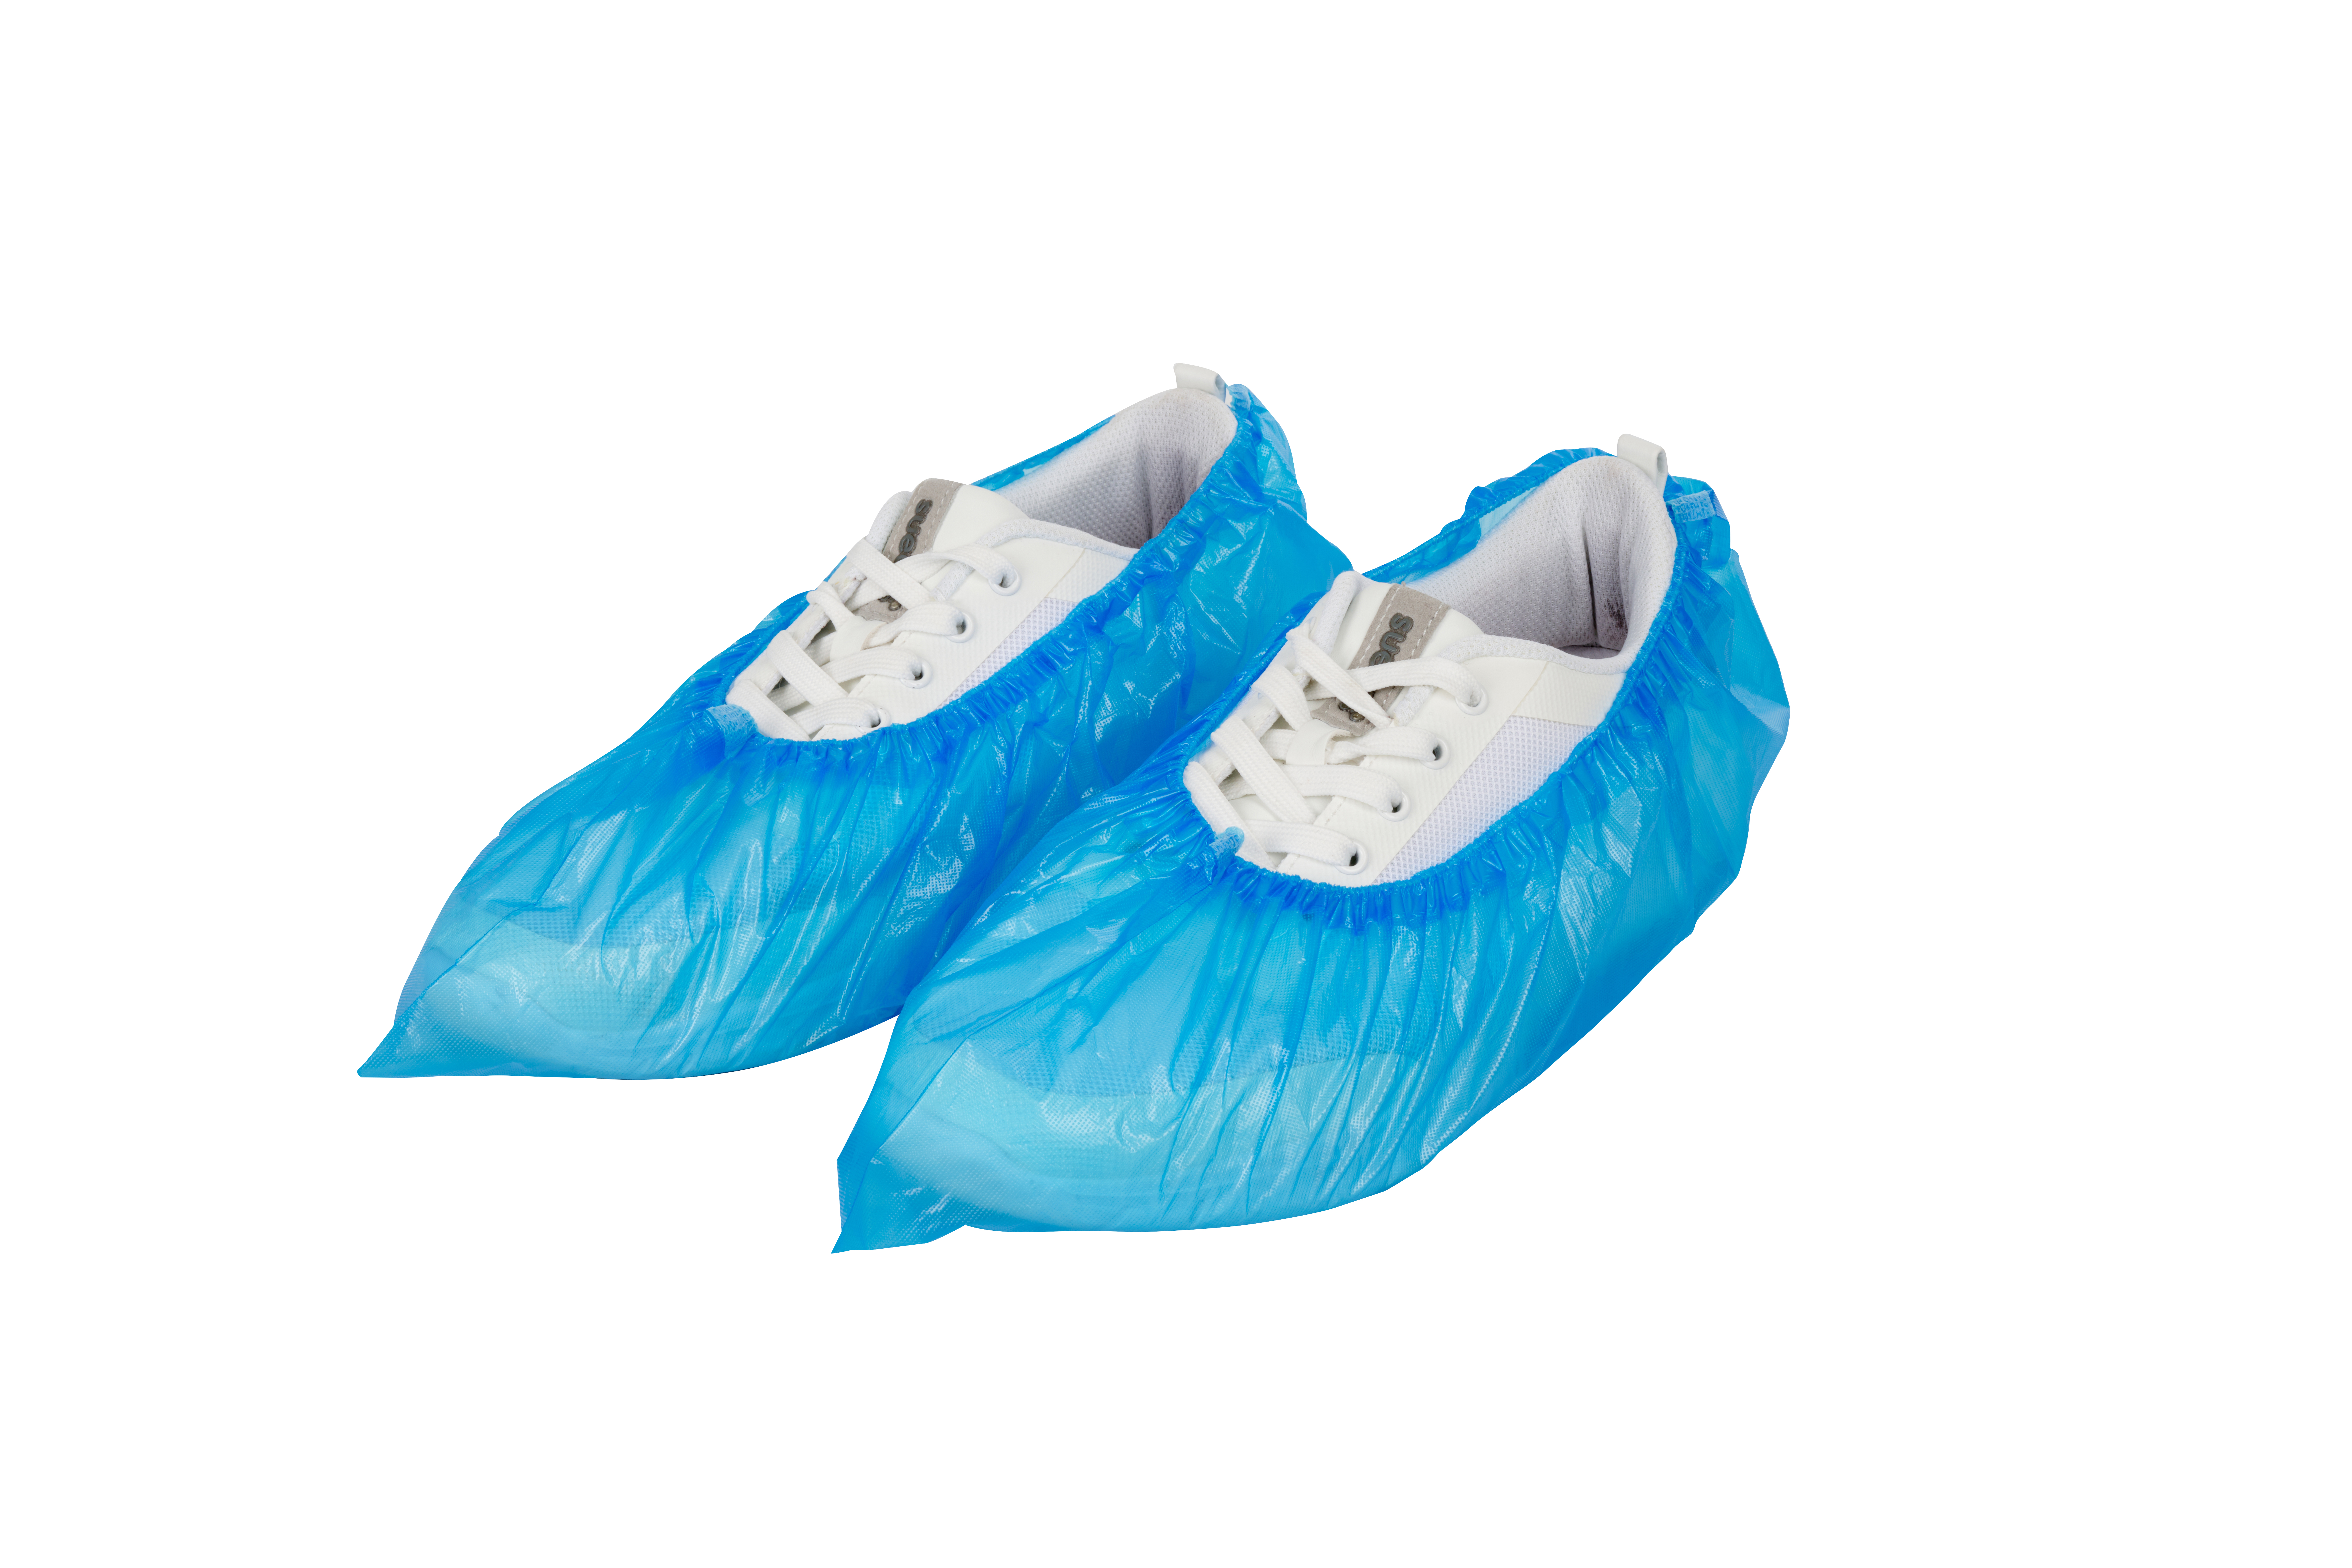 KRUUSE Disposable shoe covers, blue, 100/pk
